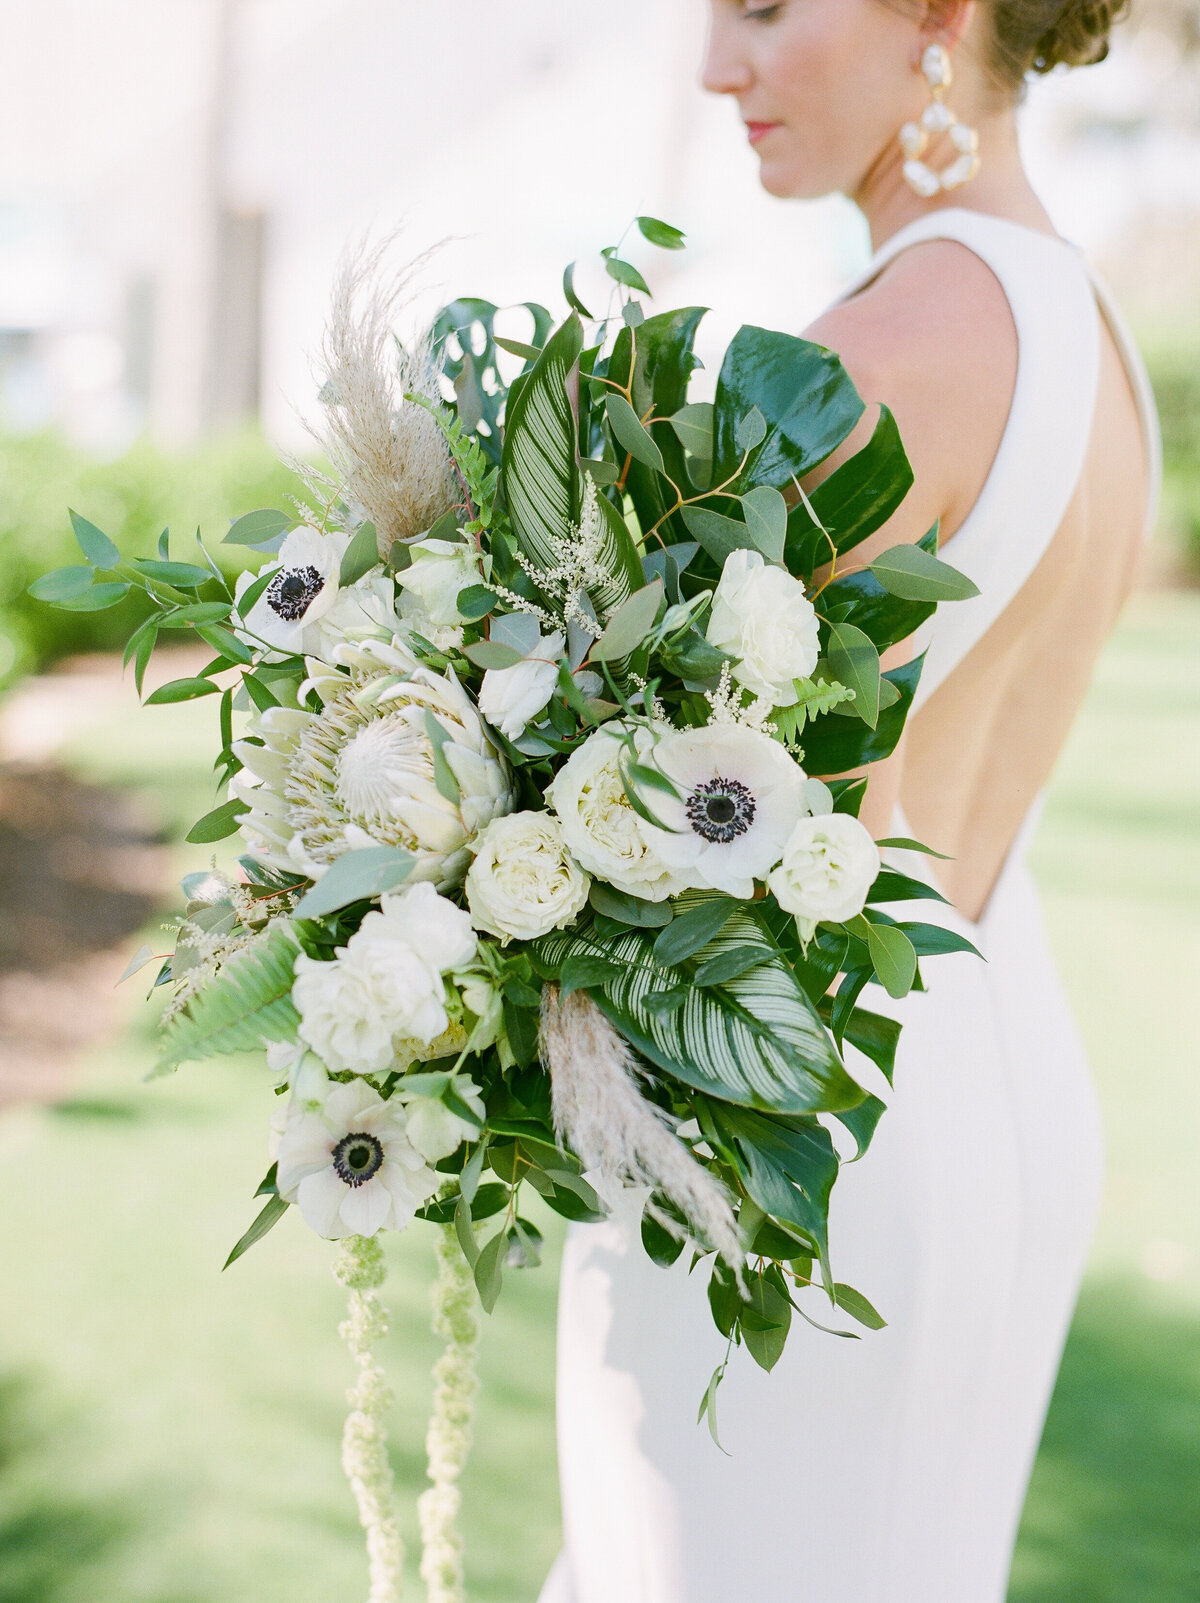 Tropical Wedding Bouquet - Chic Bridal Attire